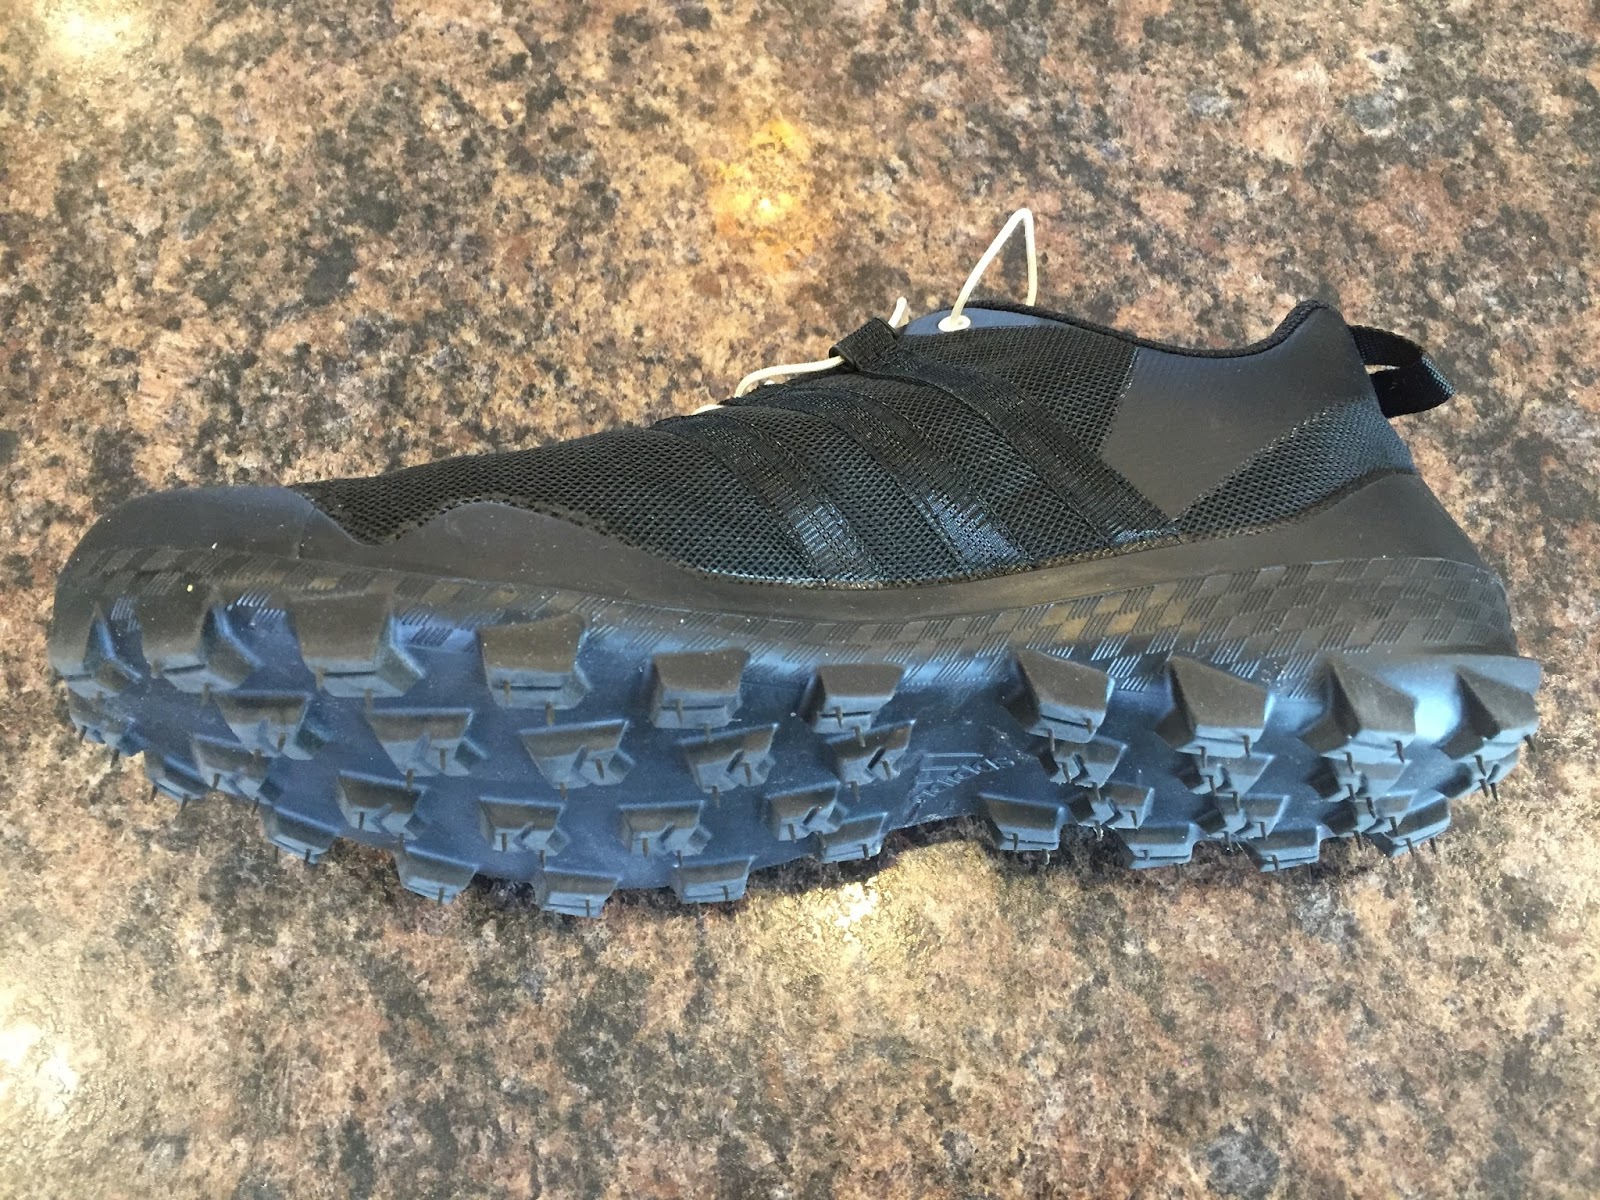 adidas terrex x king trail running shoes